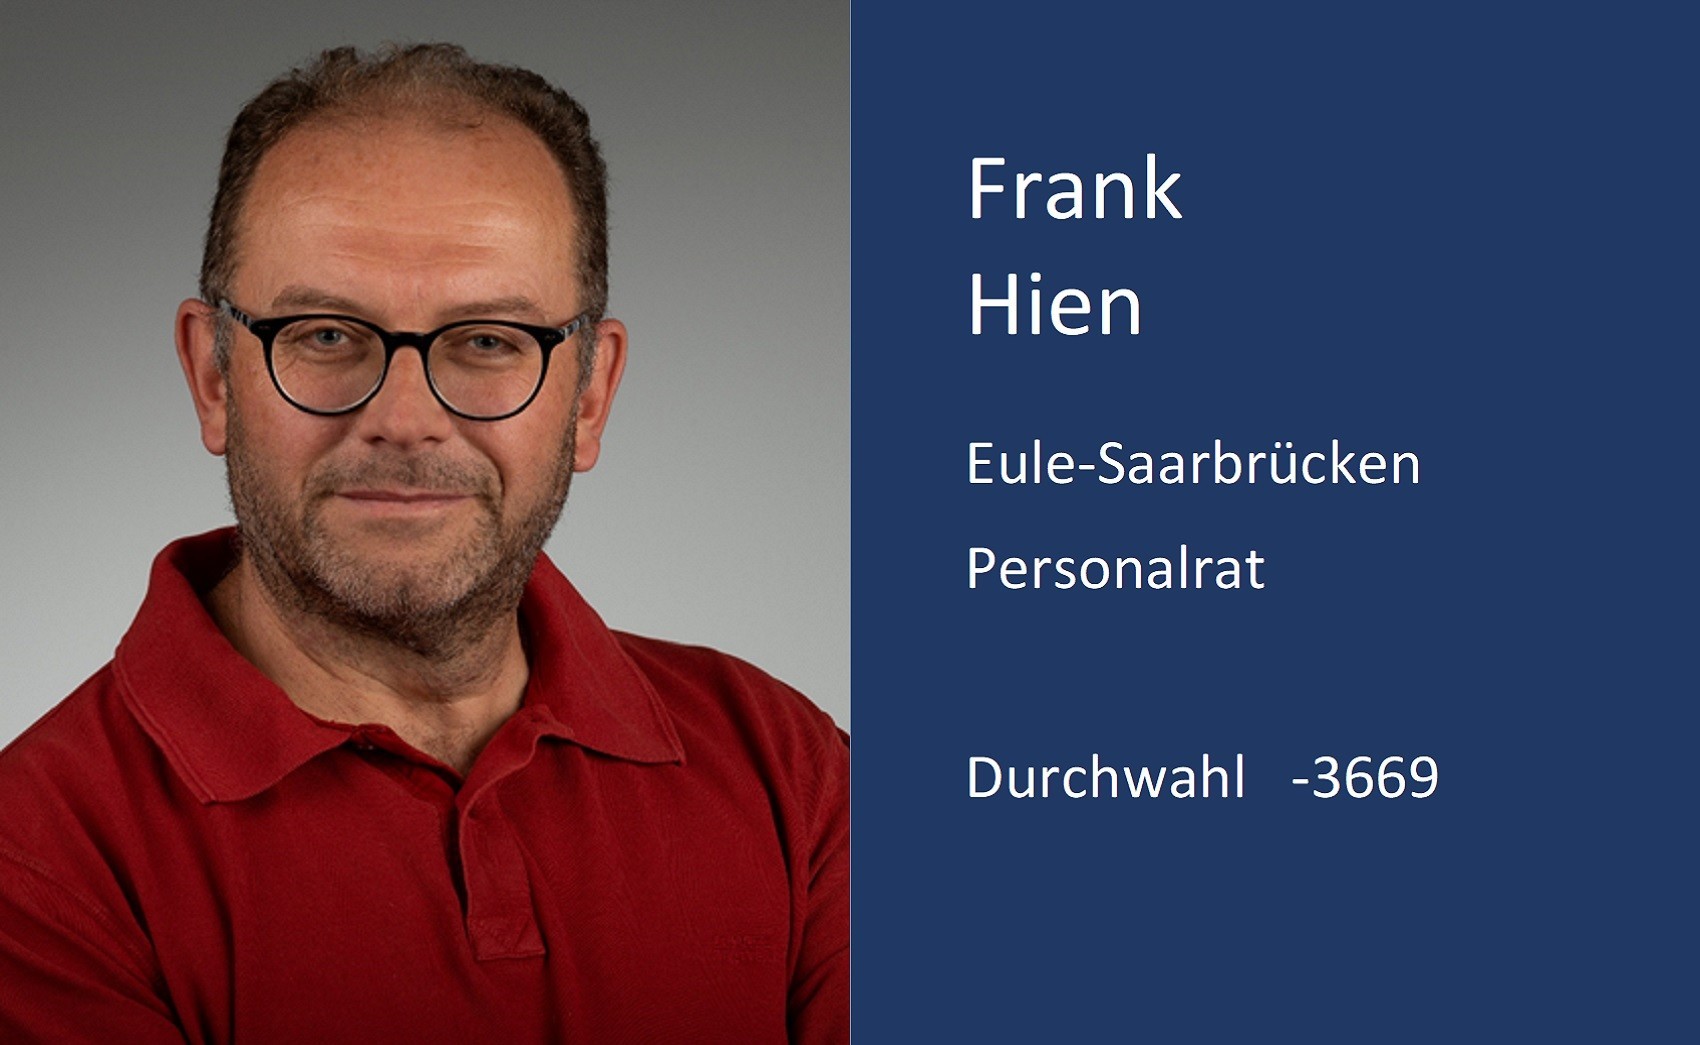 Frank Hiehn, Kontaktdaten, Durchwahl, 3 6 6 9, Email, f.hiehn ät uni v w.uni minus saarland . d e